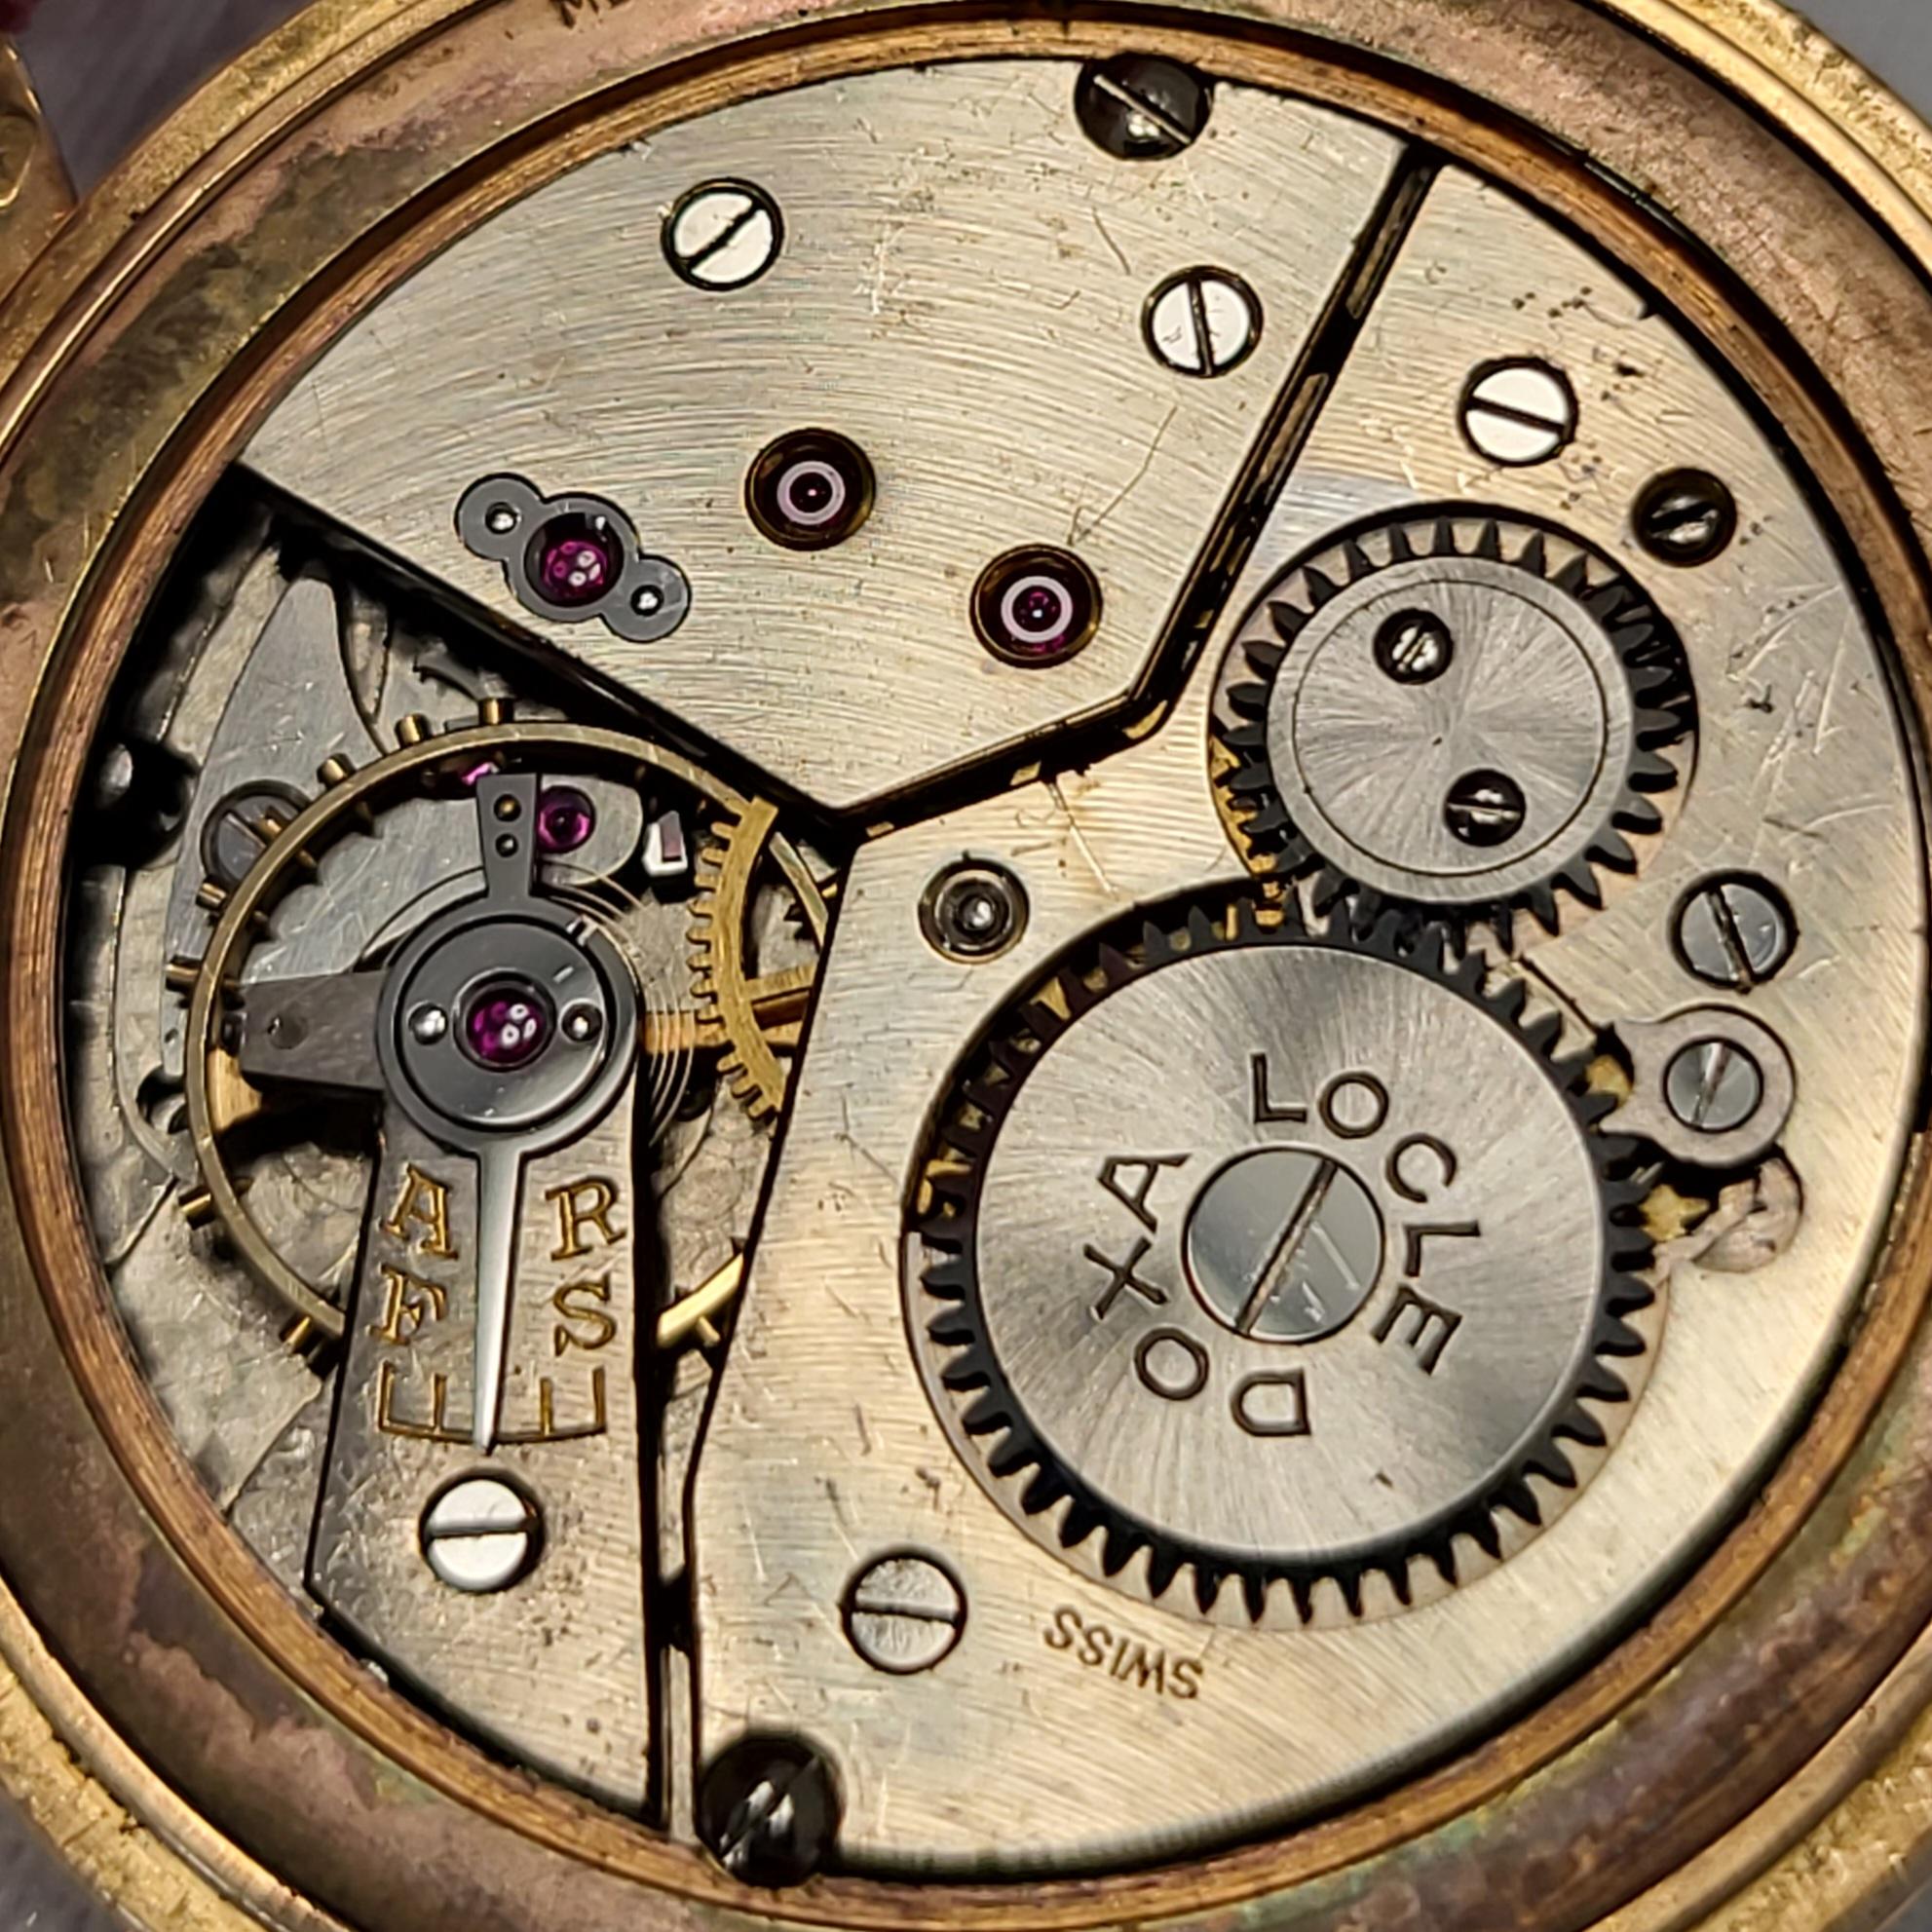 Doxa Triple Calendar Moon Phase Wrist Watch, 18kt Yellow Gold Case Anti Magnetic For Sale 7